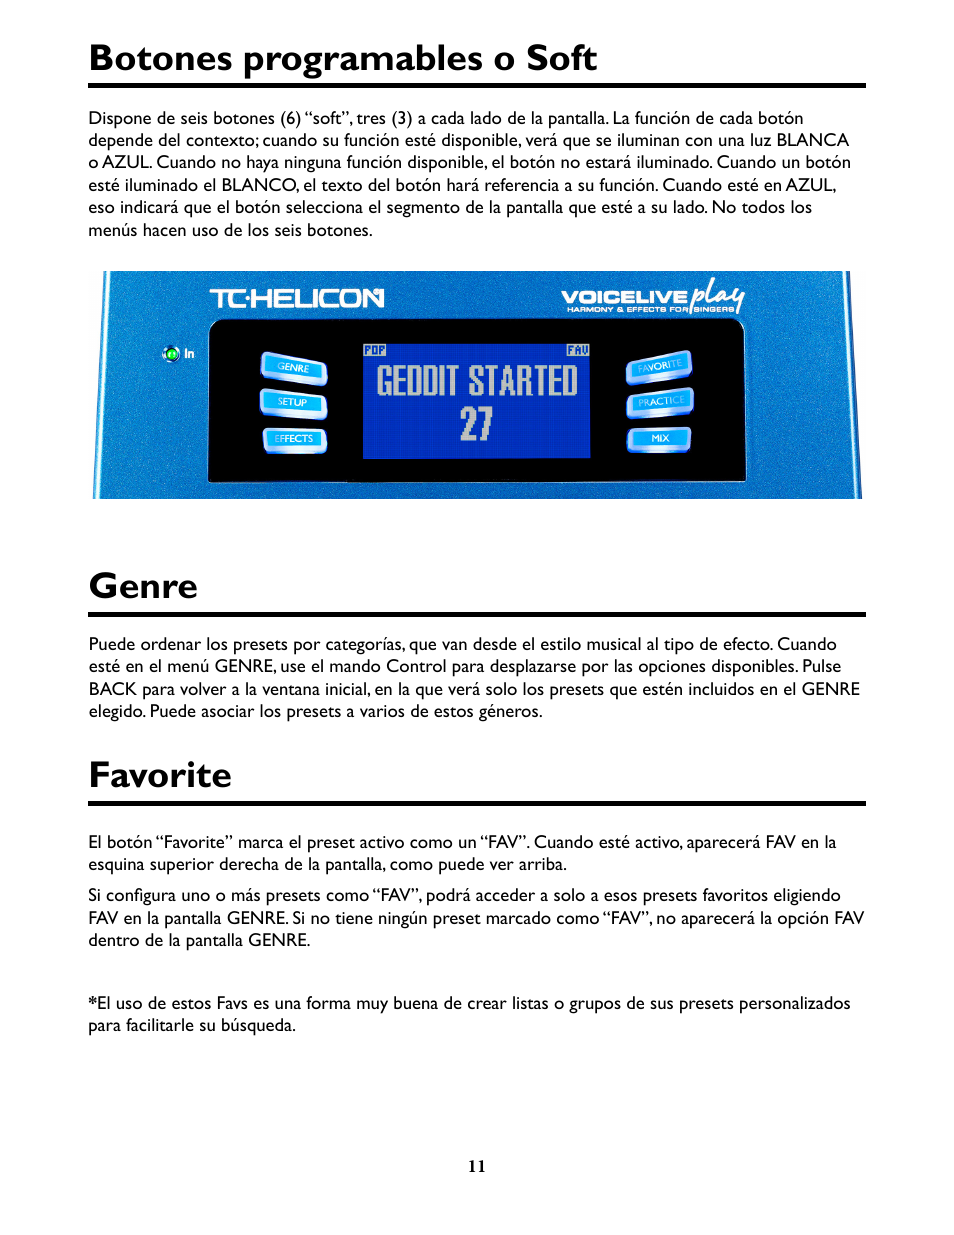 Botones Programables O Soft Genre Favorite Tc Helicon Voicelive Play Details Manual Manual Del Usuario Pagina 11 32 Original